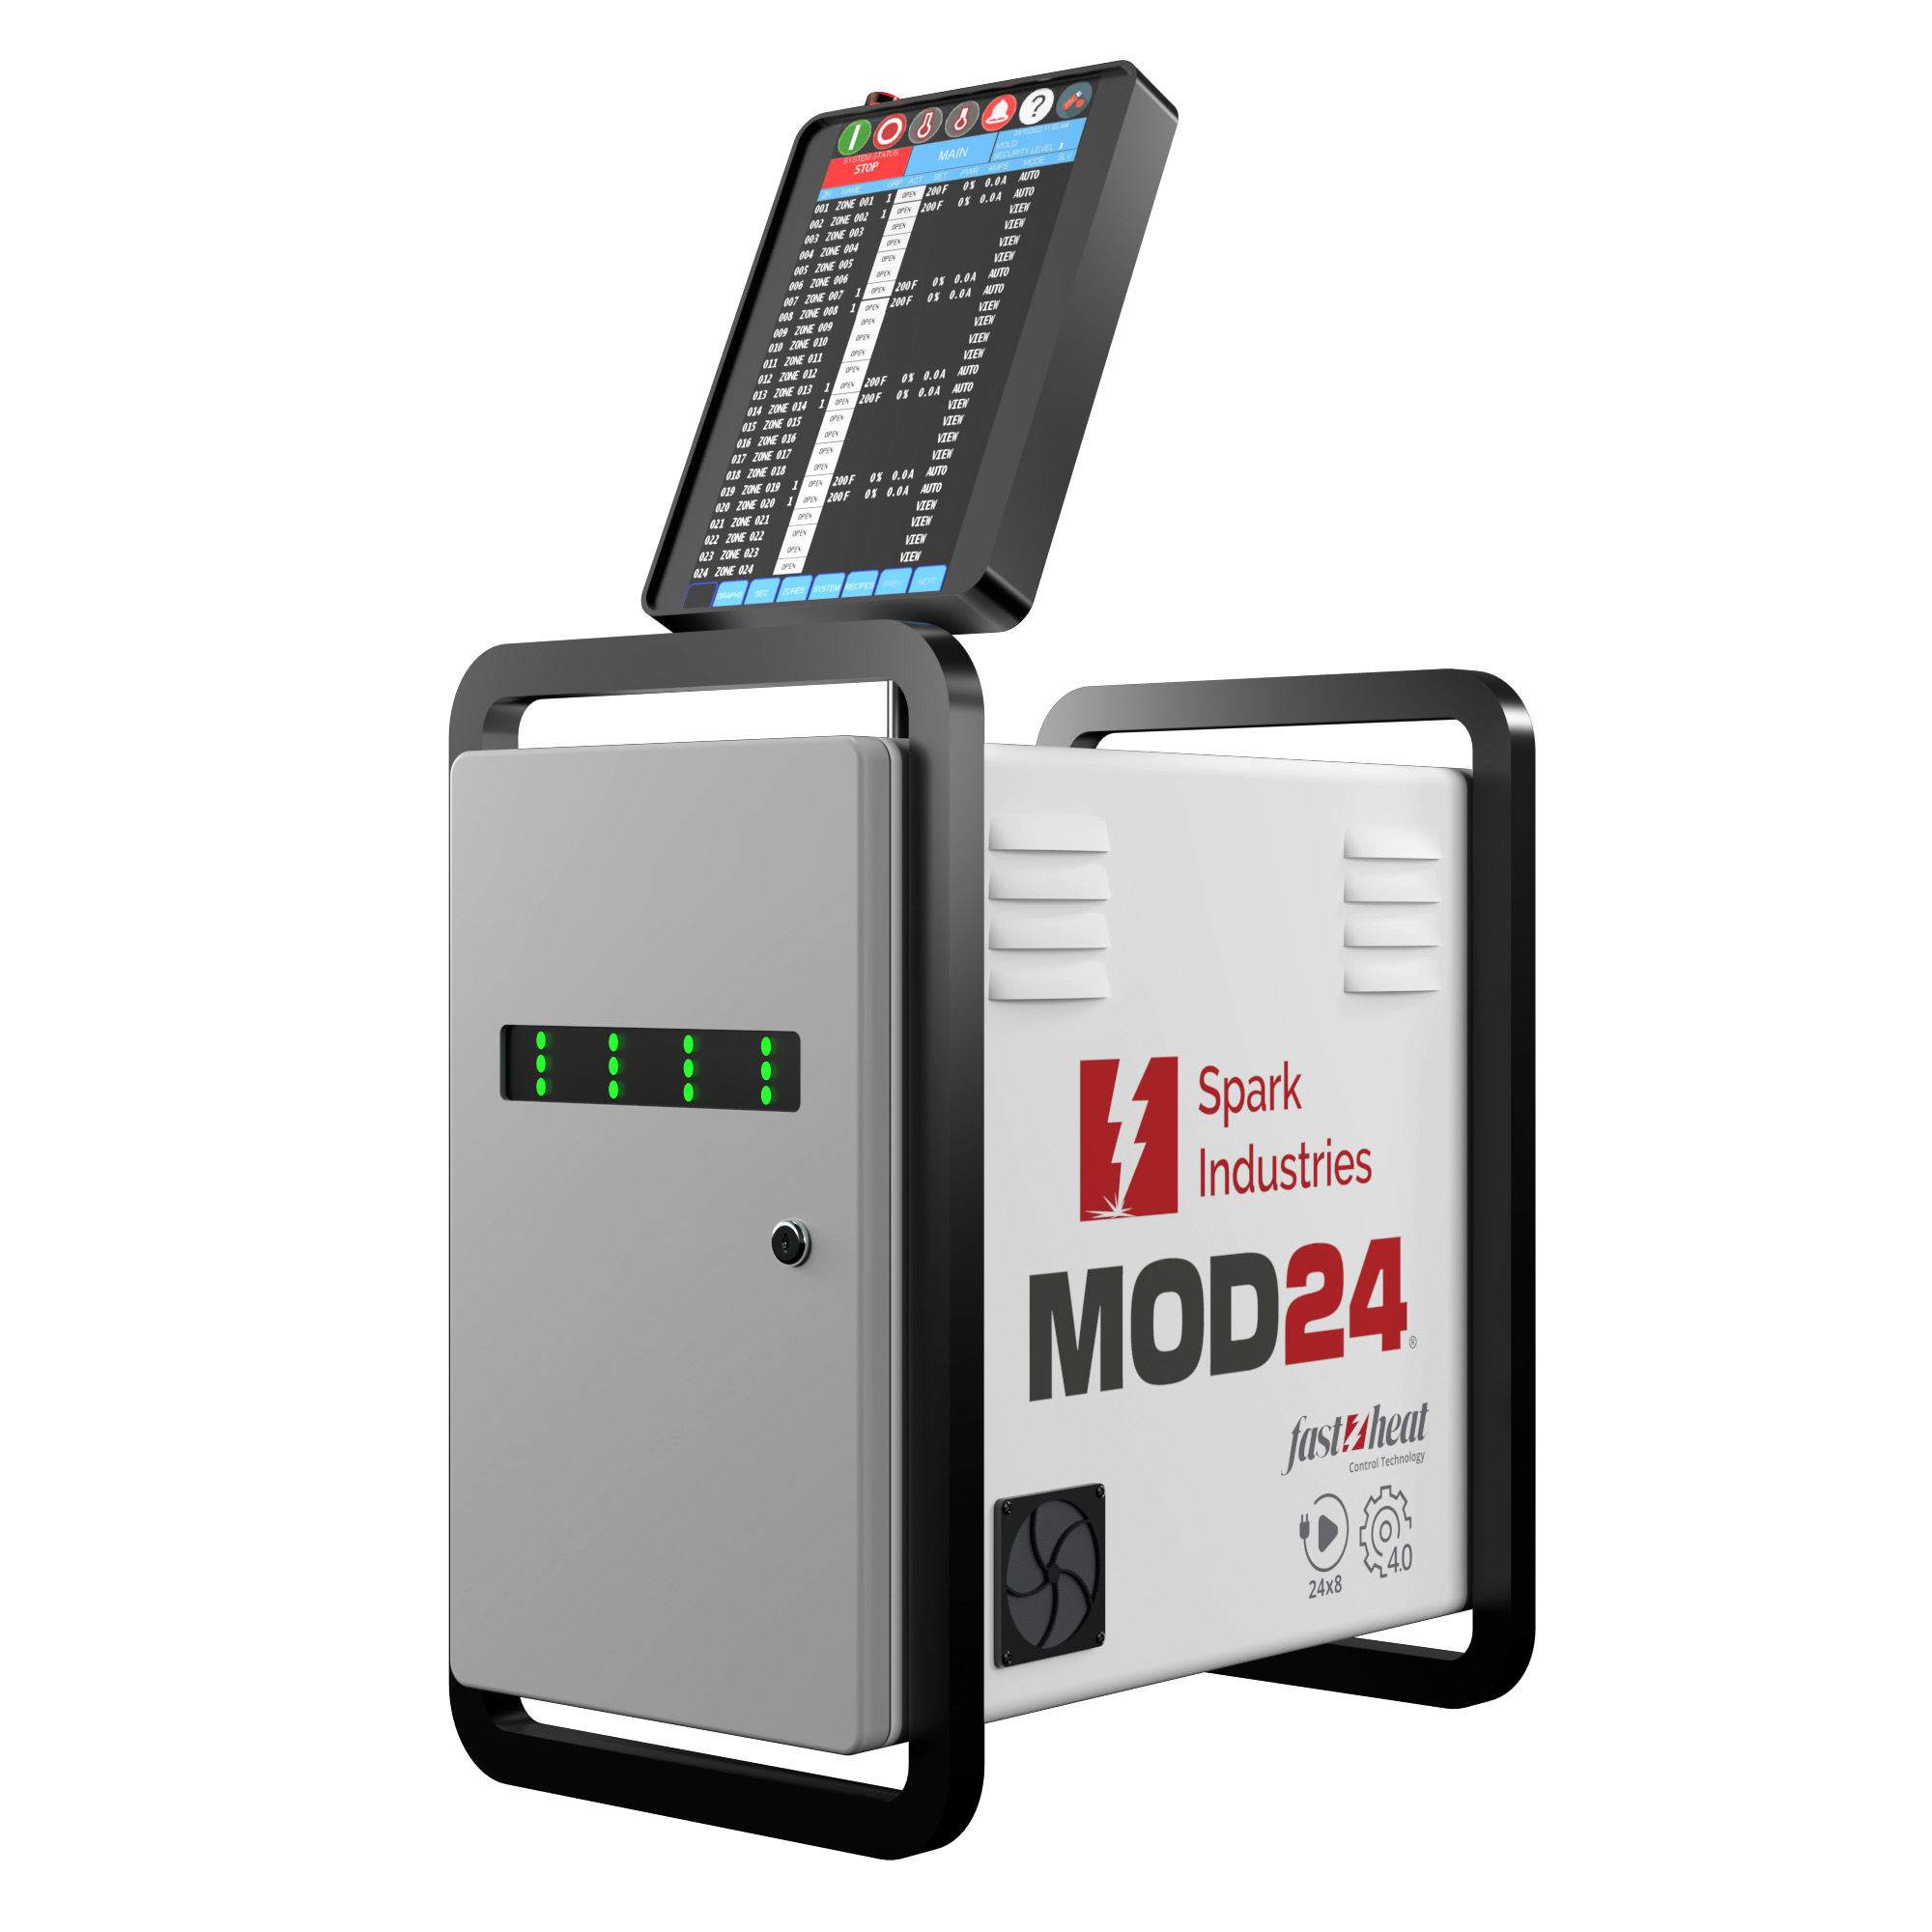 MOD24 Tabletop | Spark Industries | Hot Runner Controller